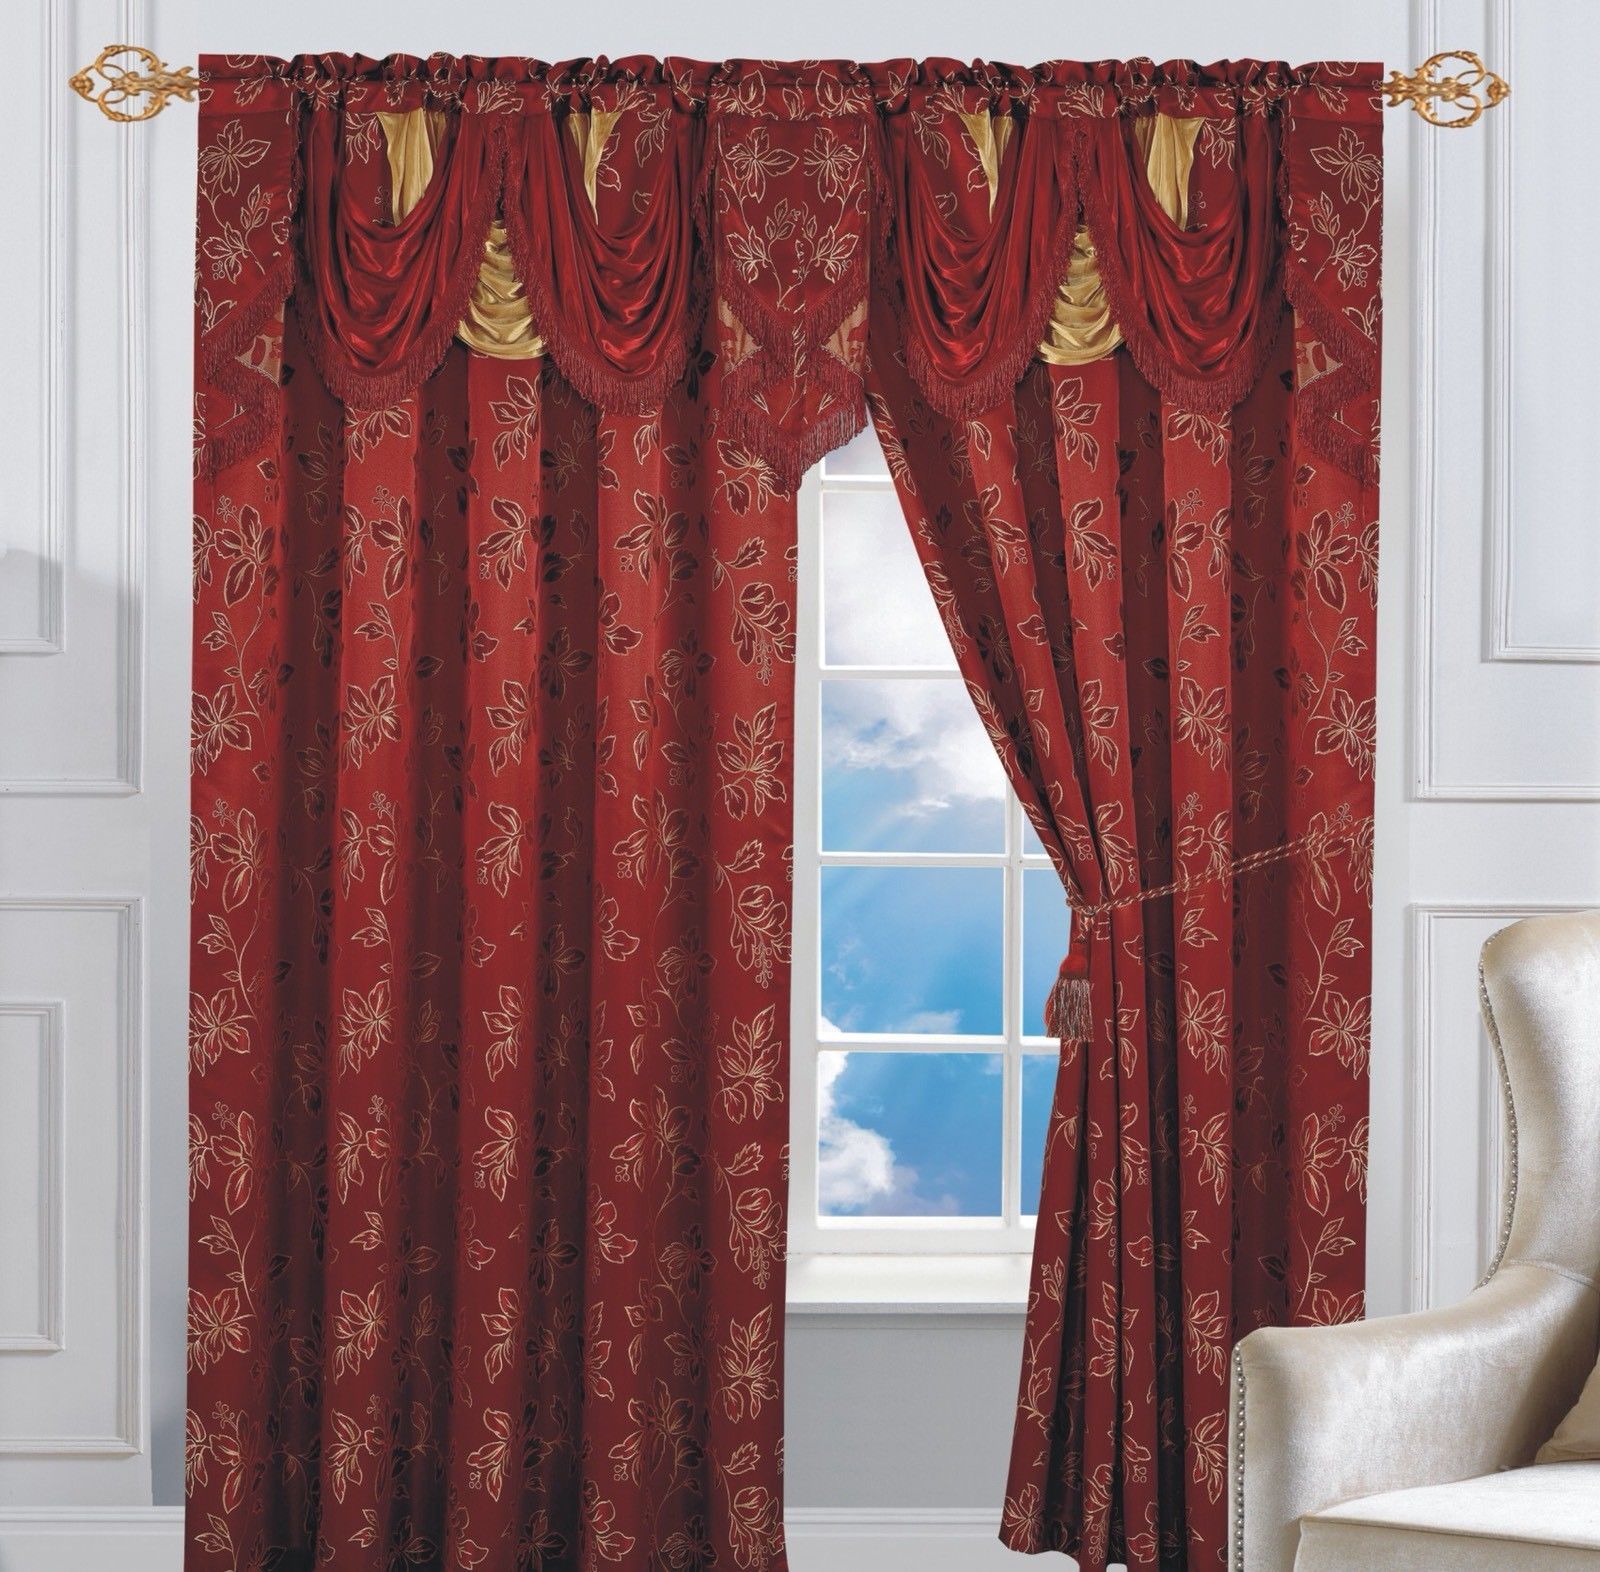 Set Of 2 Elegant Comfort Penelopie Jacquard Look Curtain Panel, Burgundy In Elegant Comfort Luxury Penelopie Jacquard Window Curtain Panel Pairs (View 5 of 20)